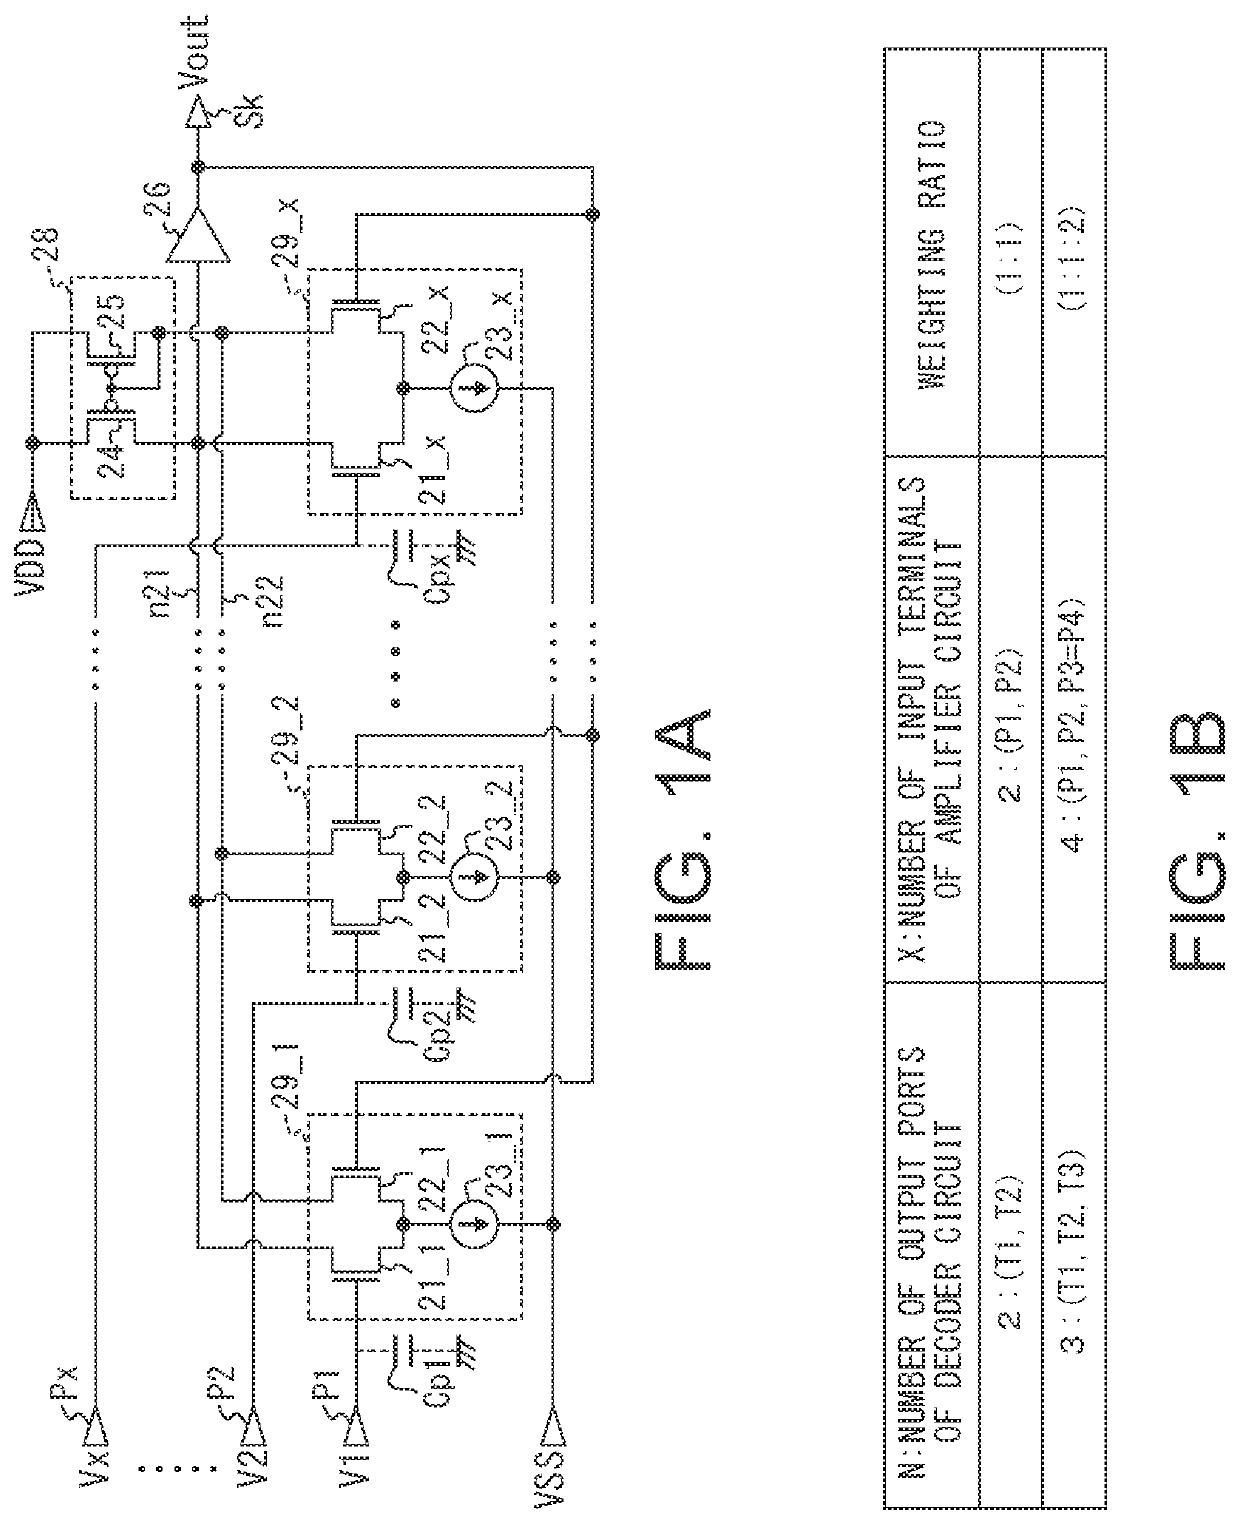 Digital-to-analog converter circuit and data driver